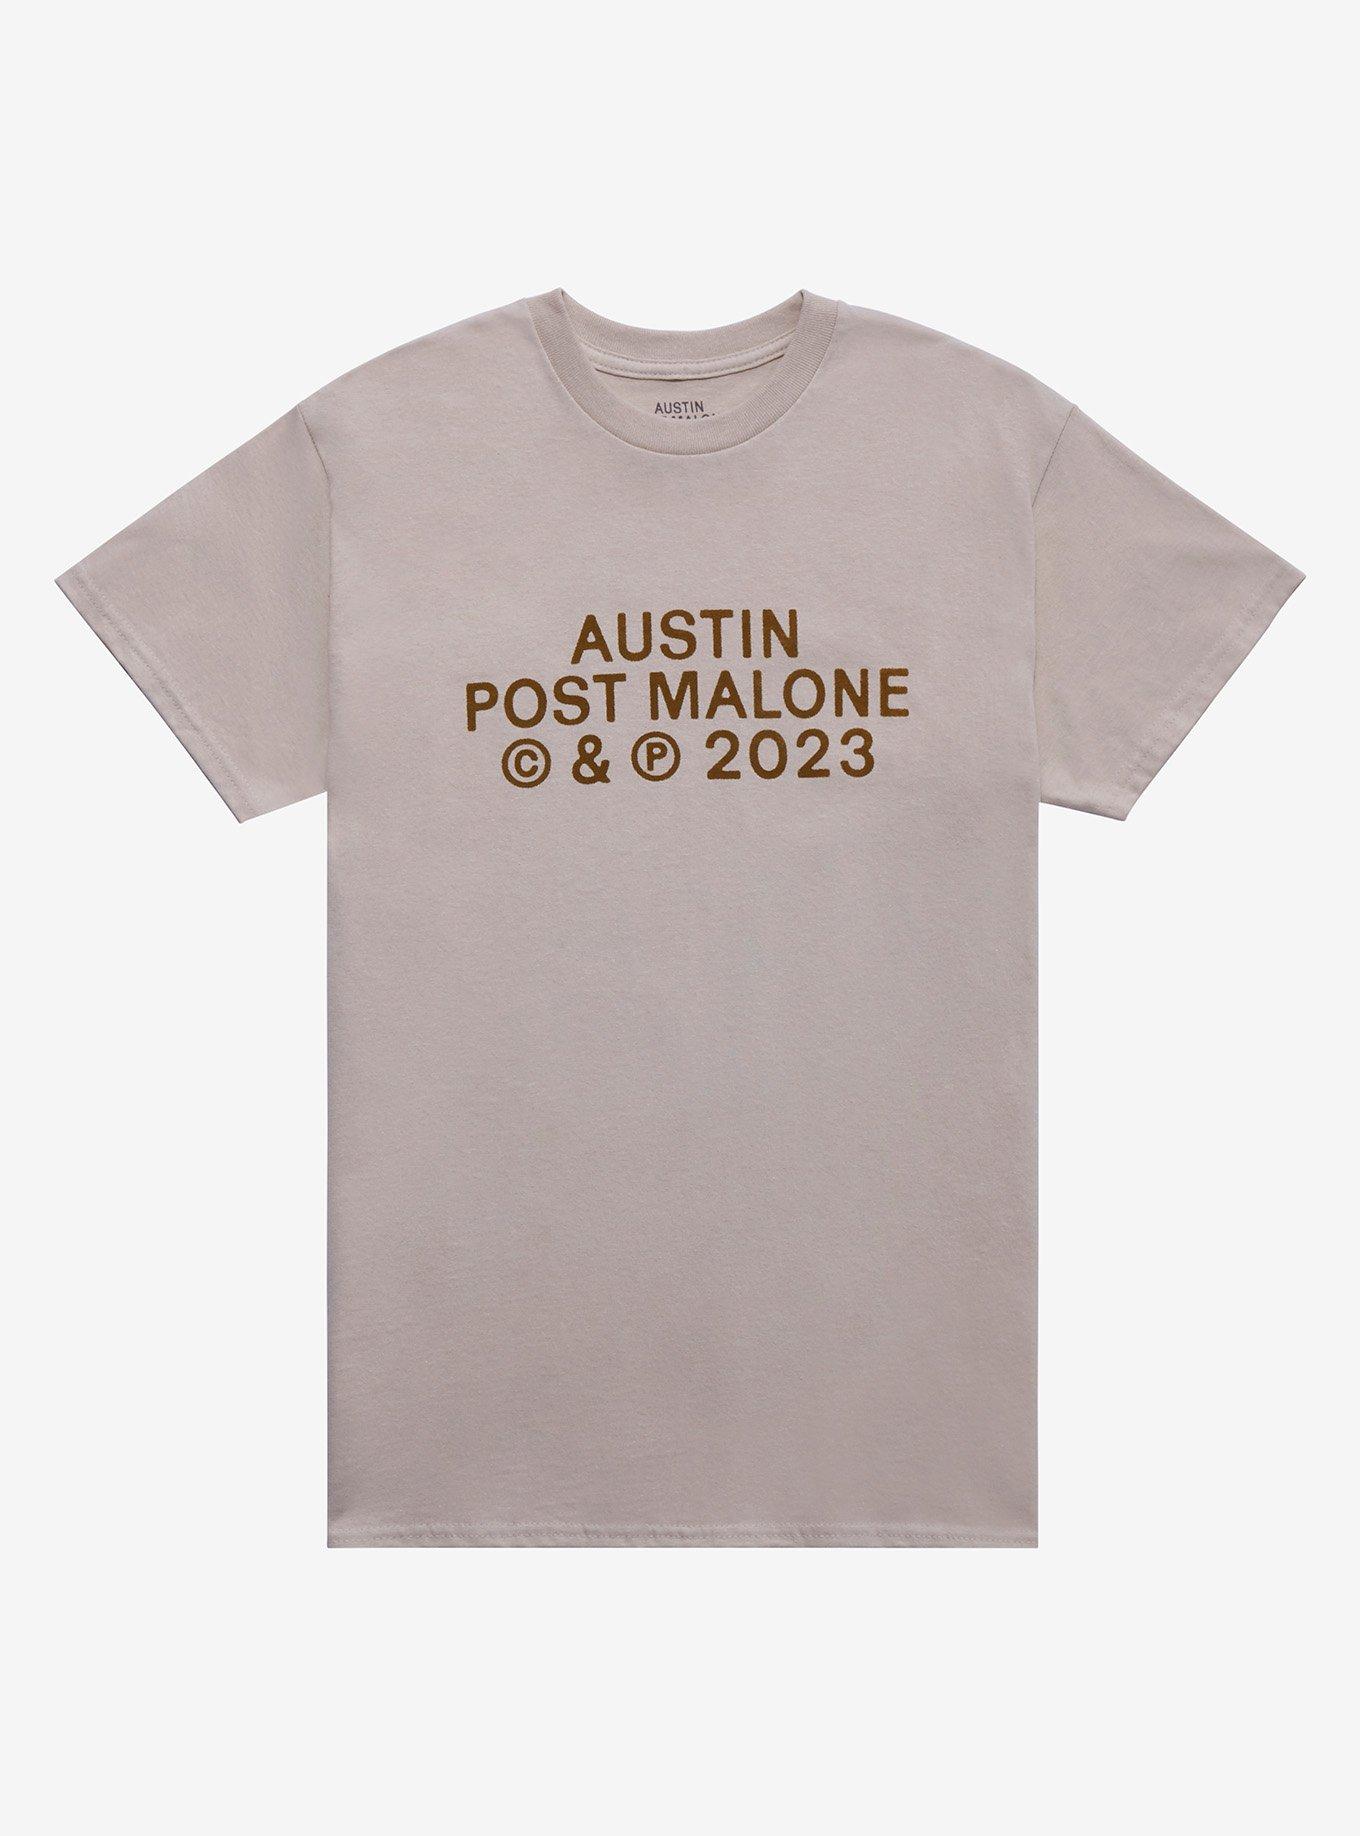 Post Malone Austin T-Shirt | Hot Topic